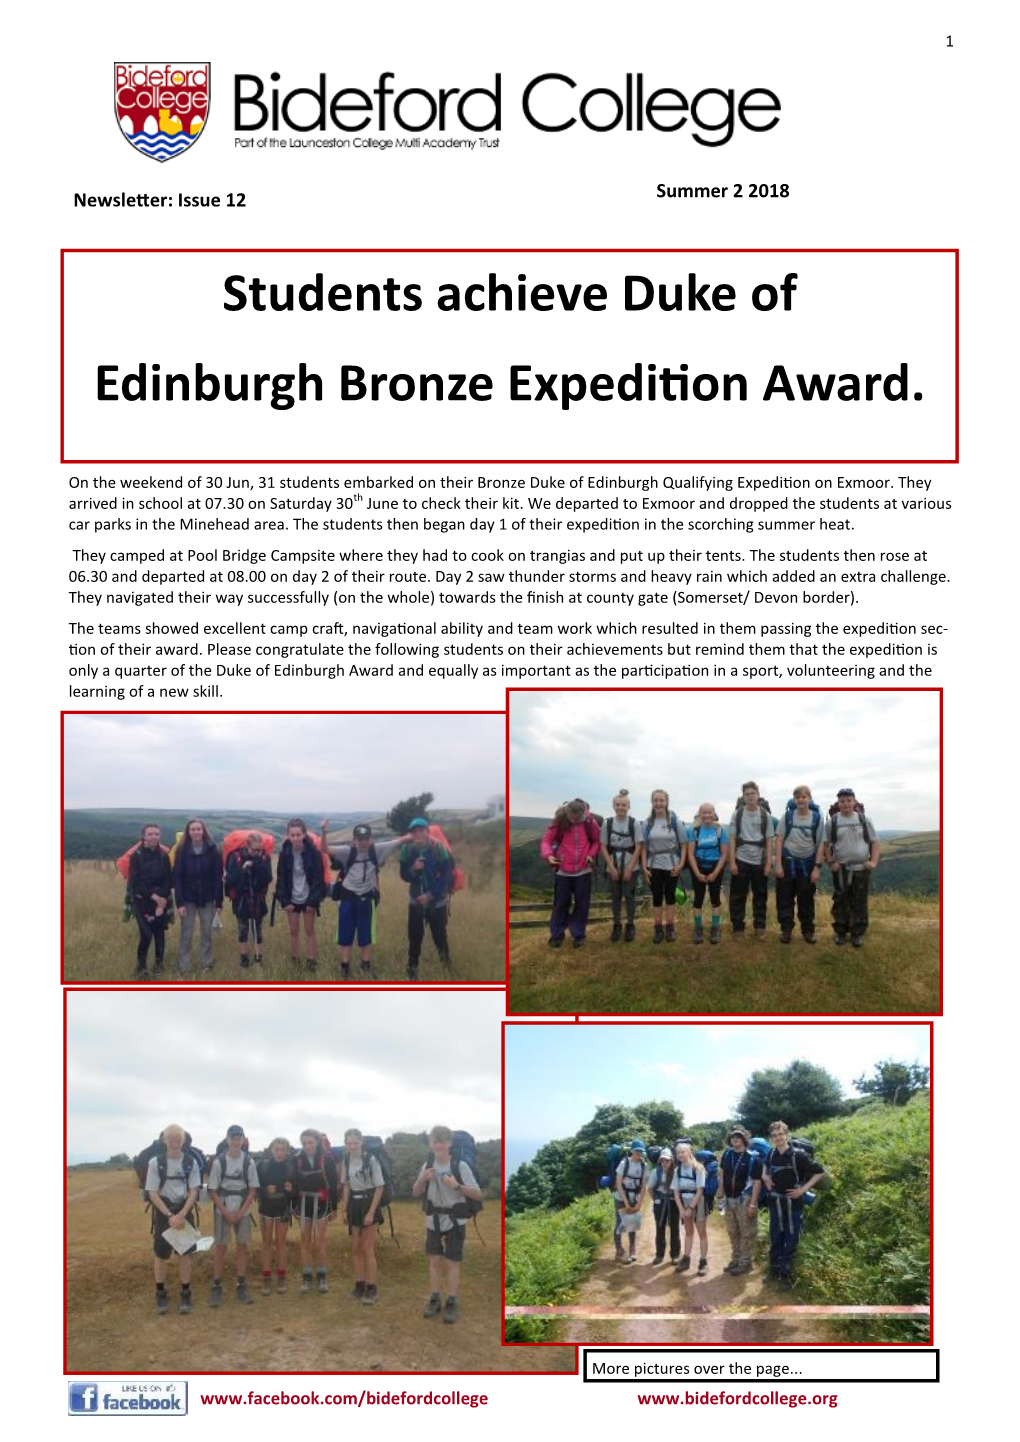 Students Achieve Duke of Edinburgh Bronze Expedition Award